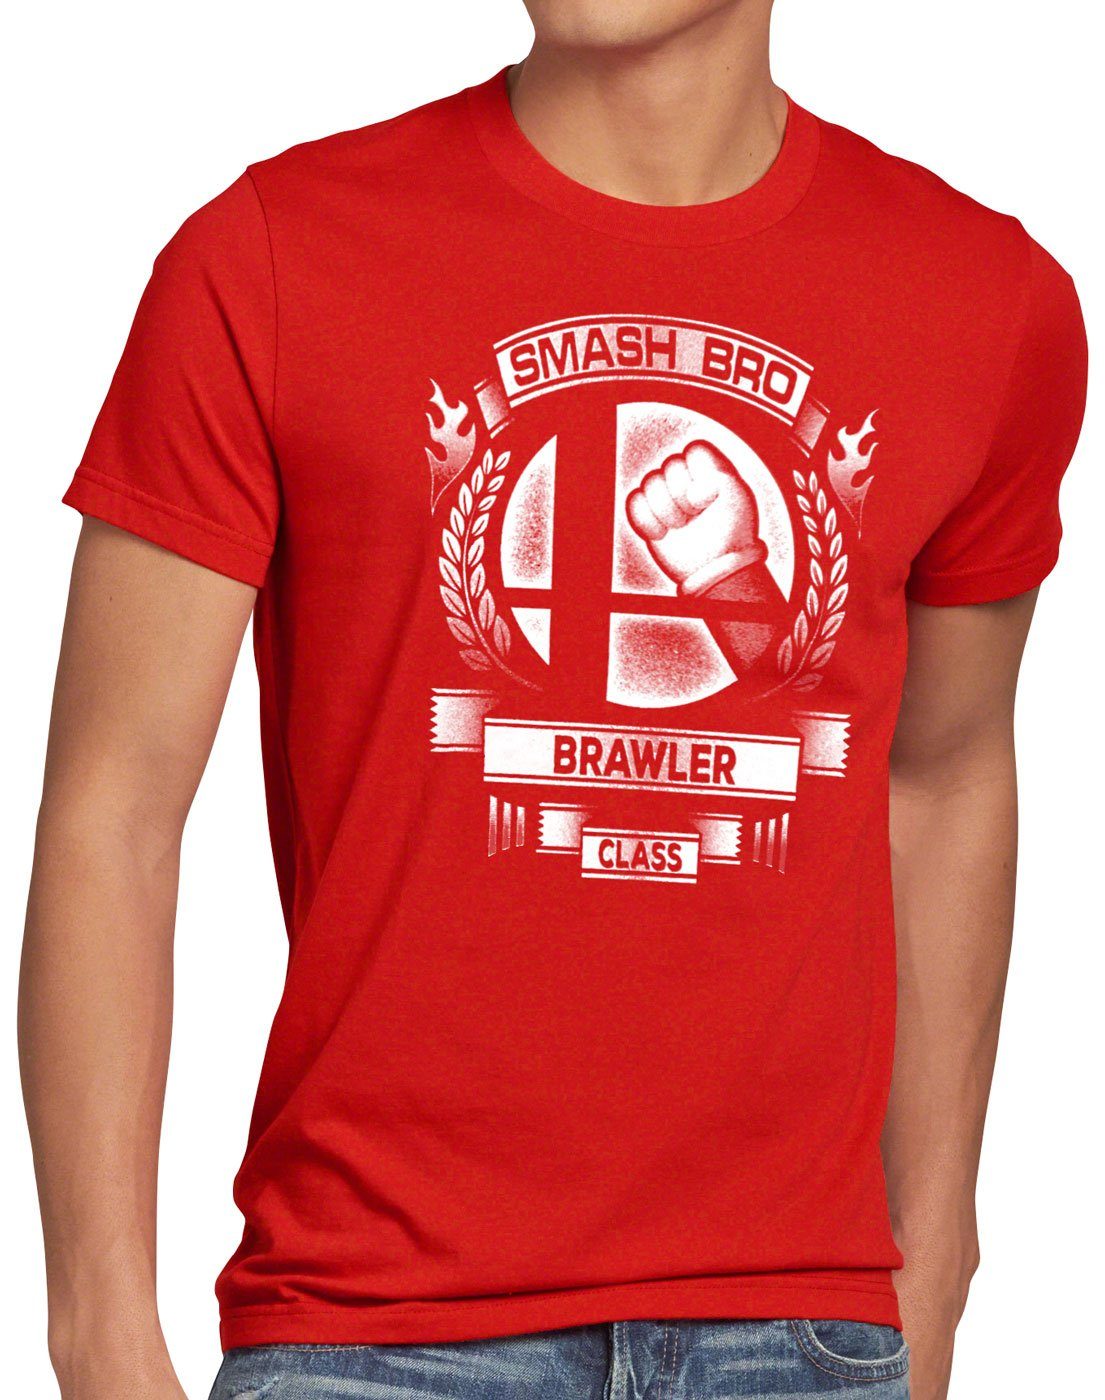 style3 Print-Shirt Herren T-Shirt Brawler Smash ultimate brothers super switch